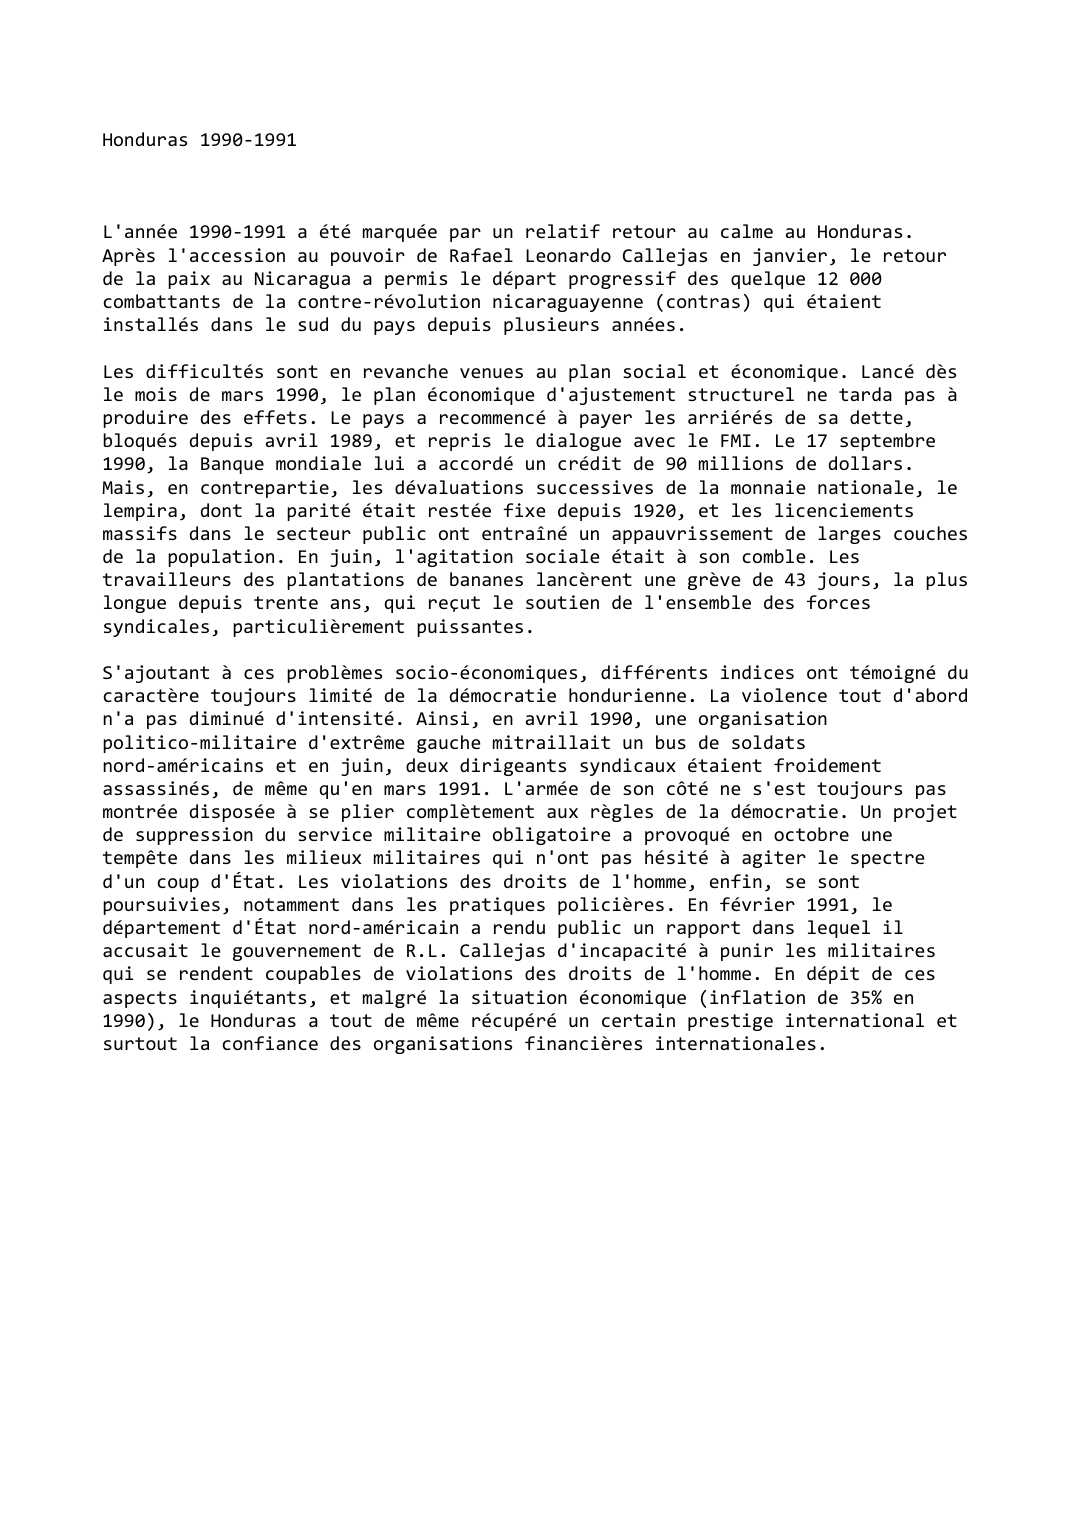 Prévisualisation du document Honduras (1990-1991)